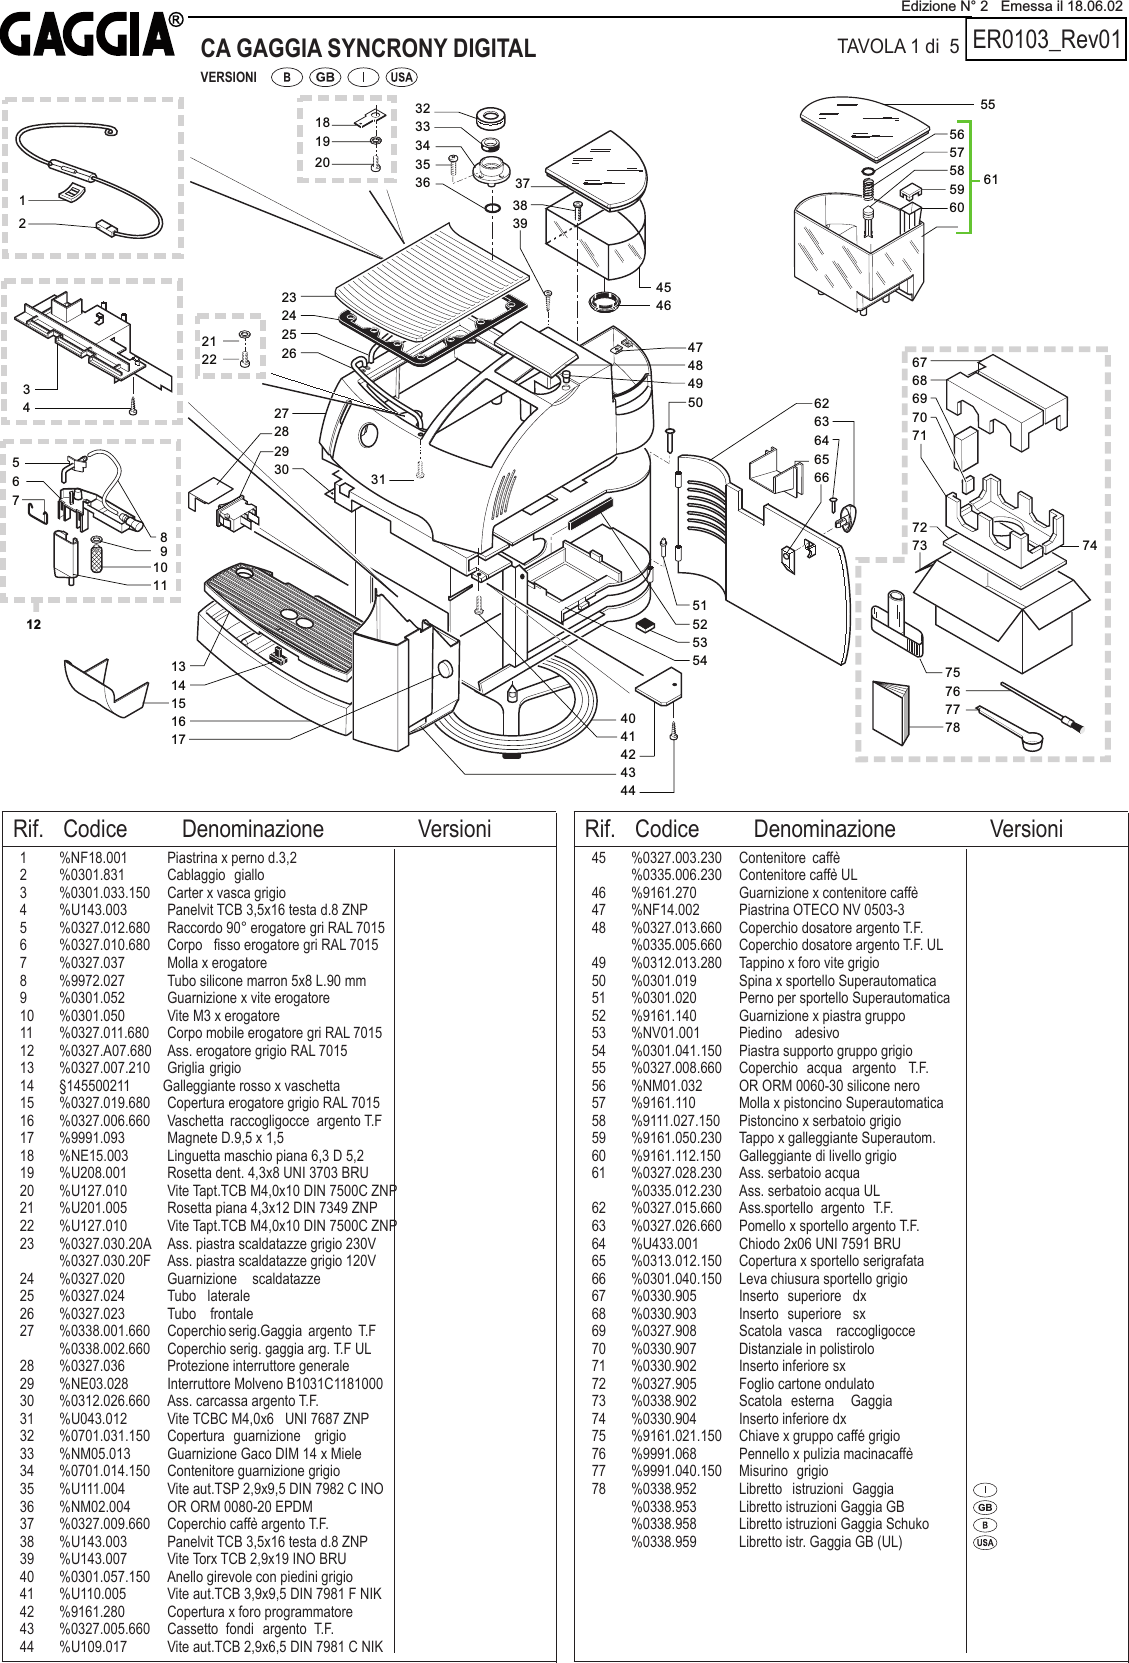 Page 1 of 5 - Gaggia Old Version Syncrony Digital Diagram E003.038 Ed.02 (Gaggia Digital) User Manual